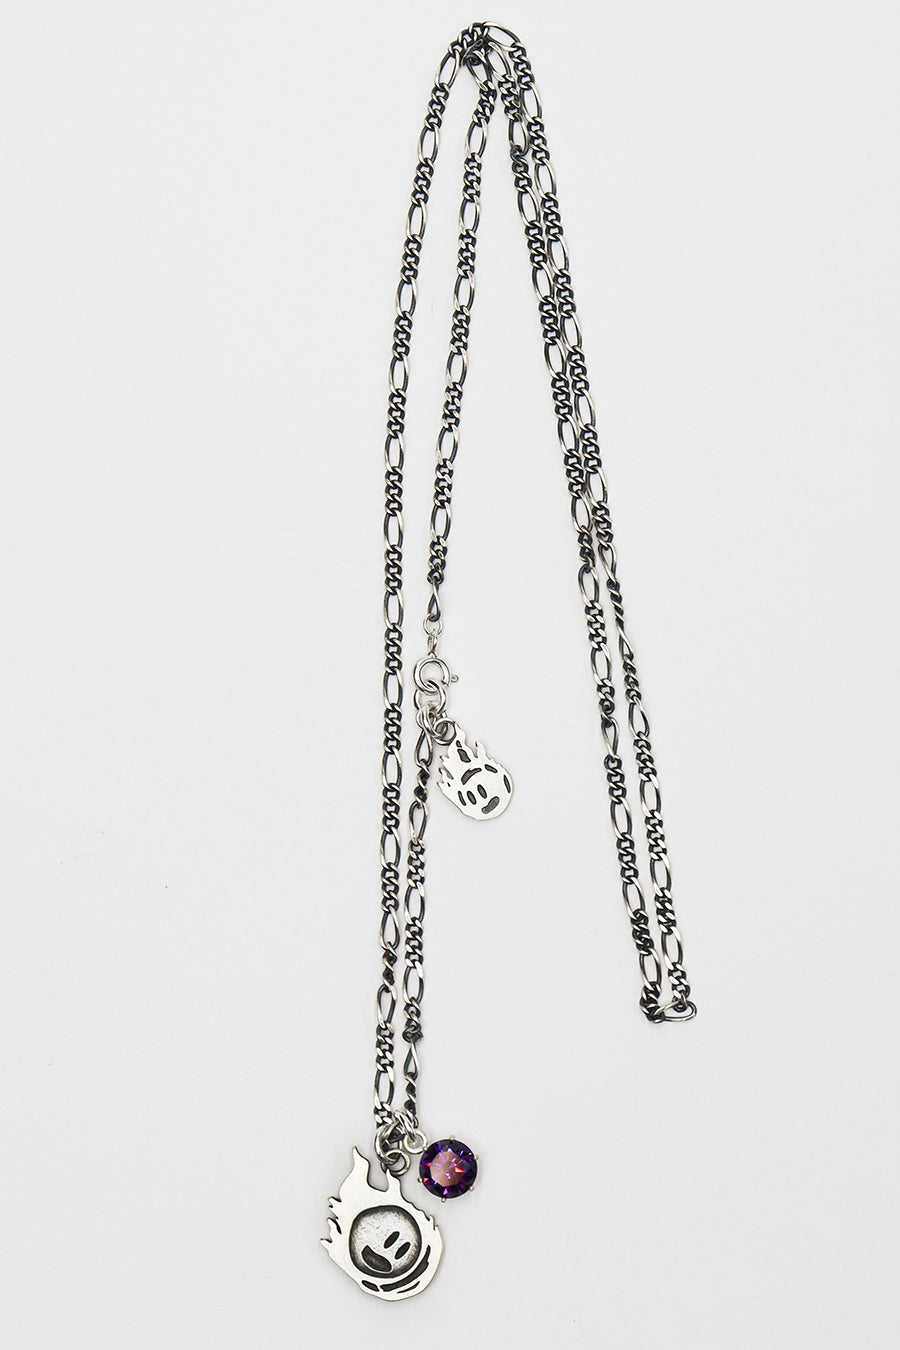 Stardust necklace (black) (925 silver)